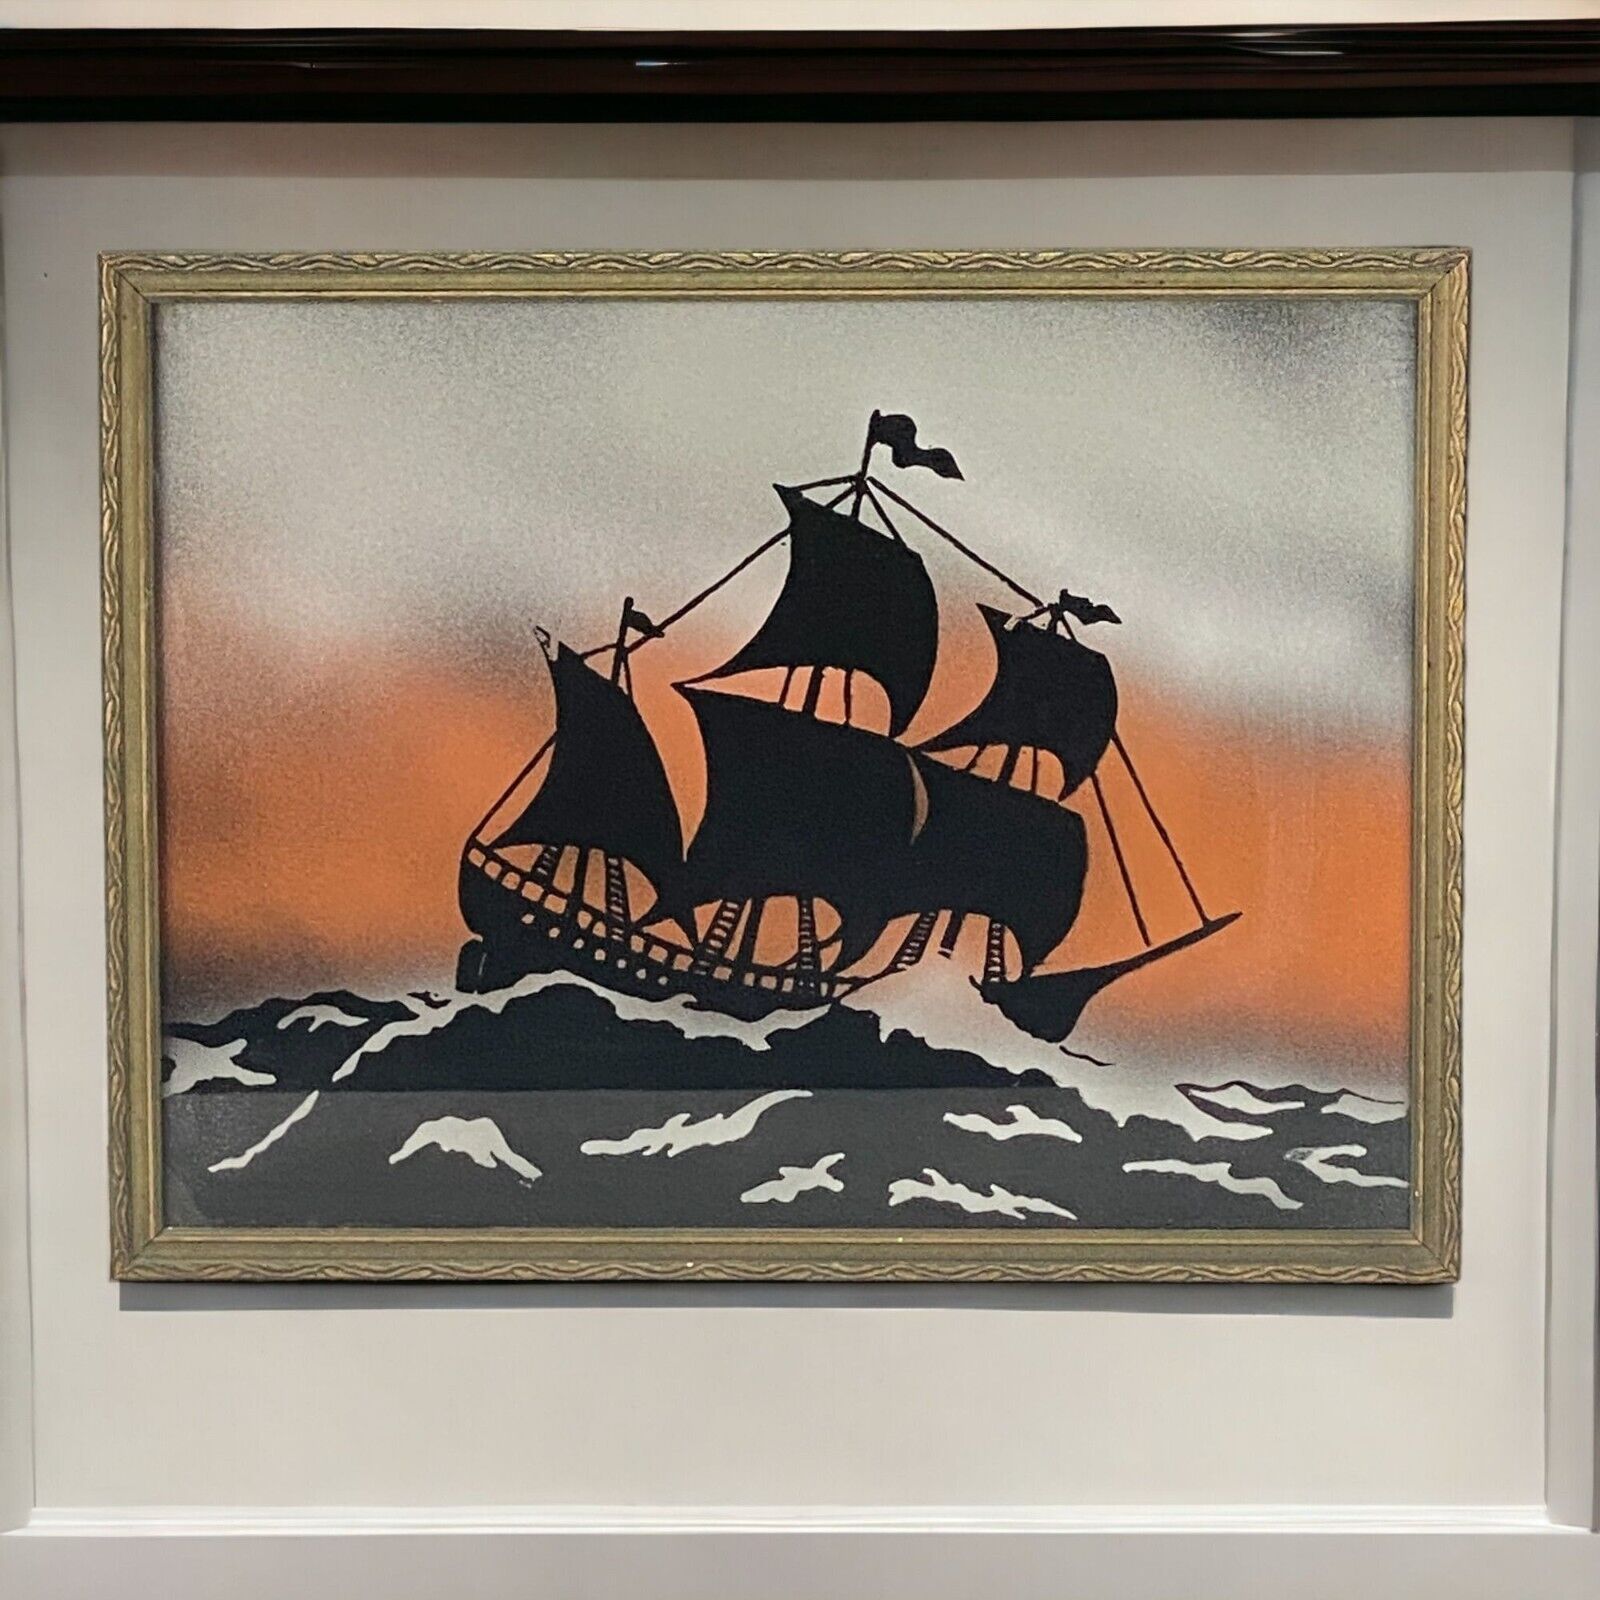 Vintage Sailing Ship Reverse Paint Silhouette Framed Art Wall Decor